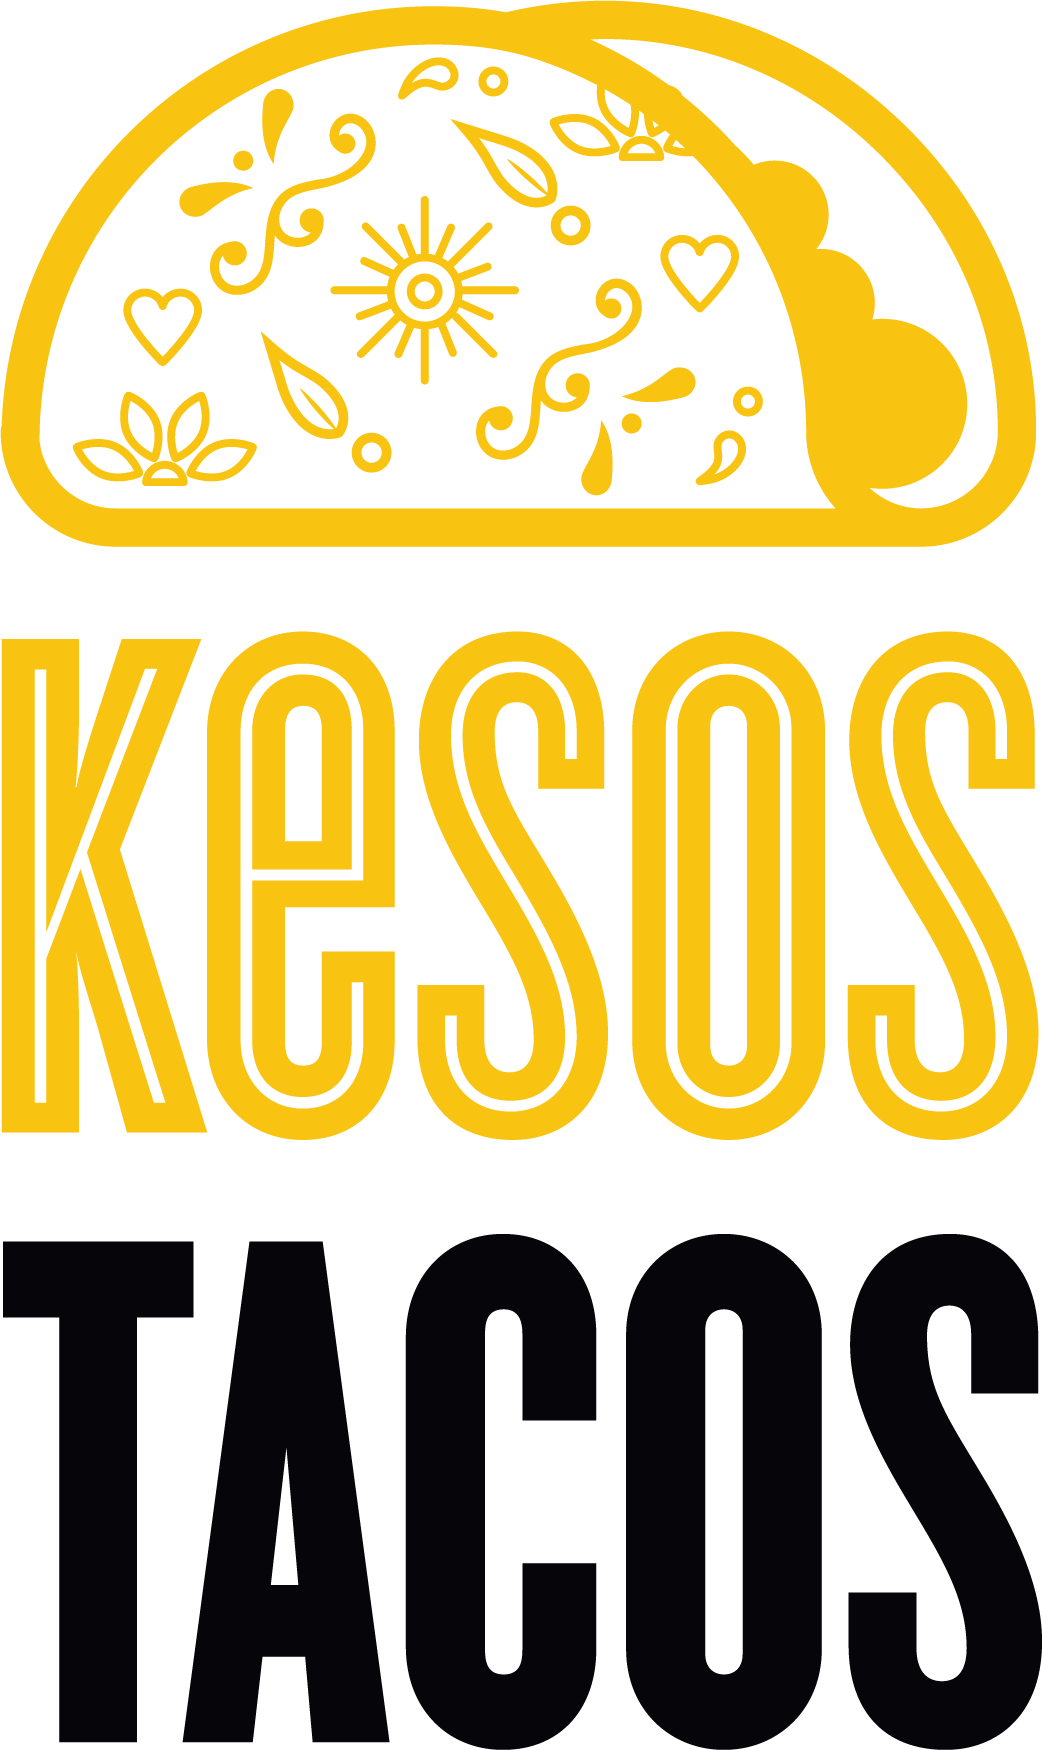 Kesos Taco Logo By Envision Creative In Austin, Texas - Kesos Tacos (1042x1750)